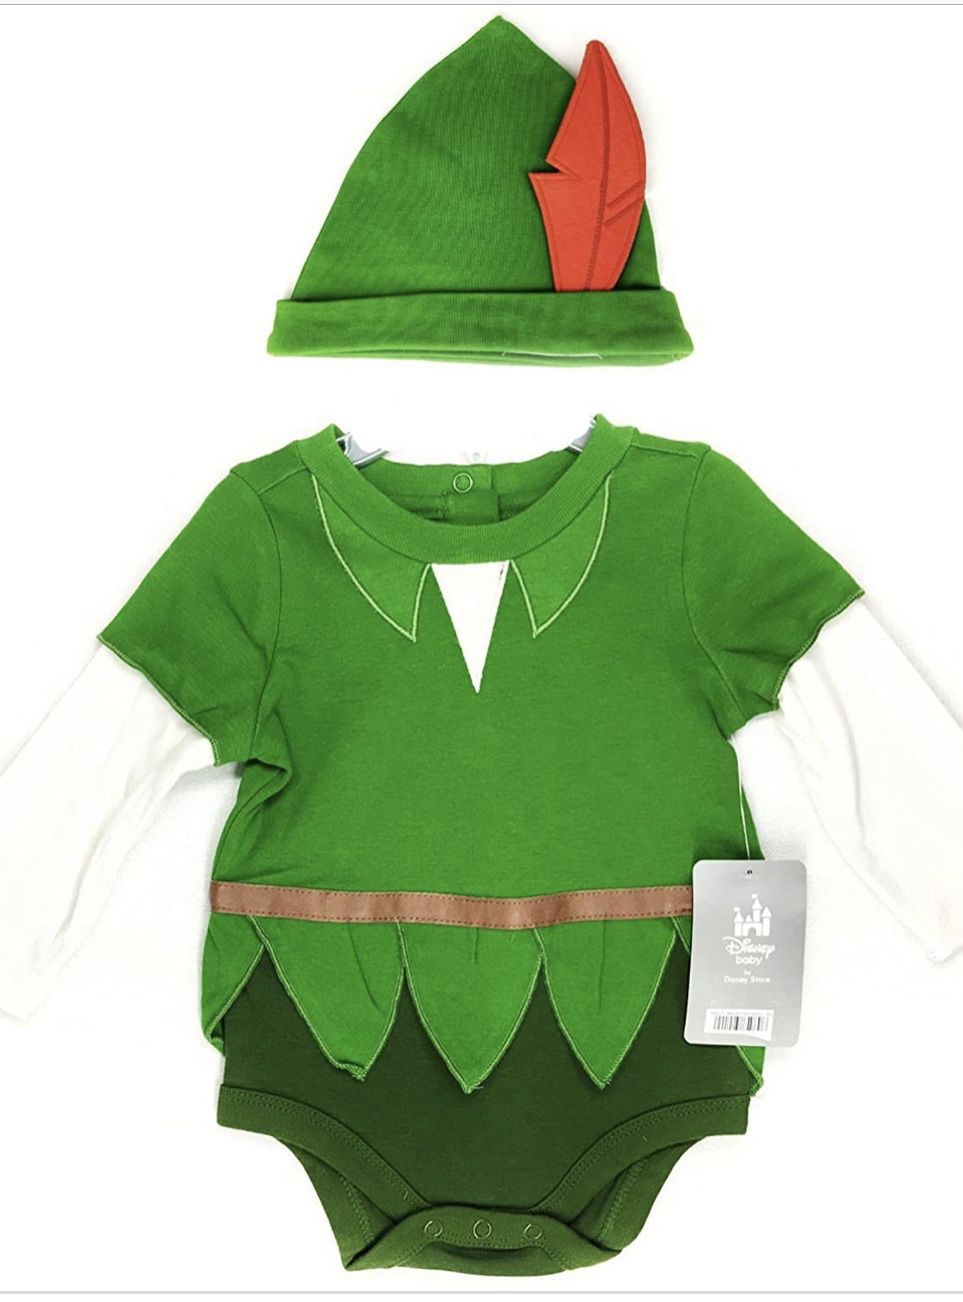 Peter Pan Baby Costume